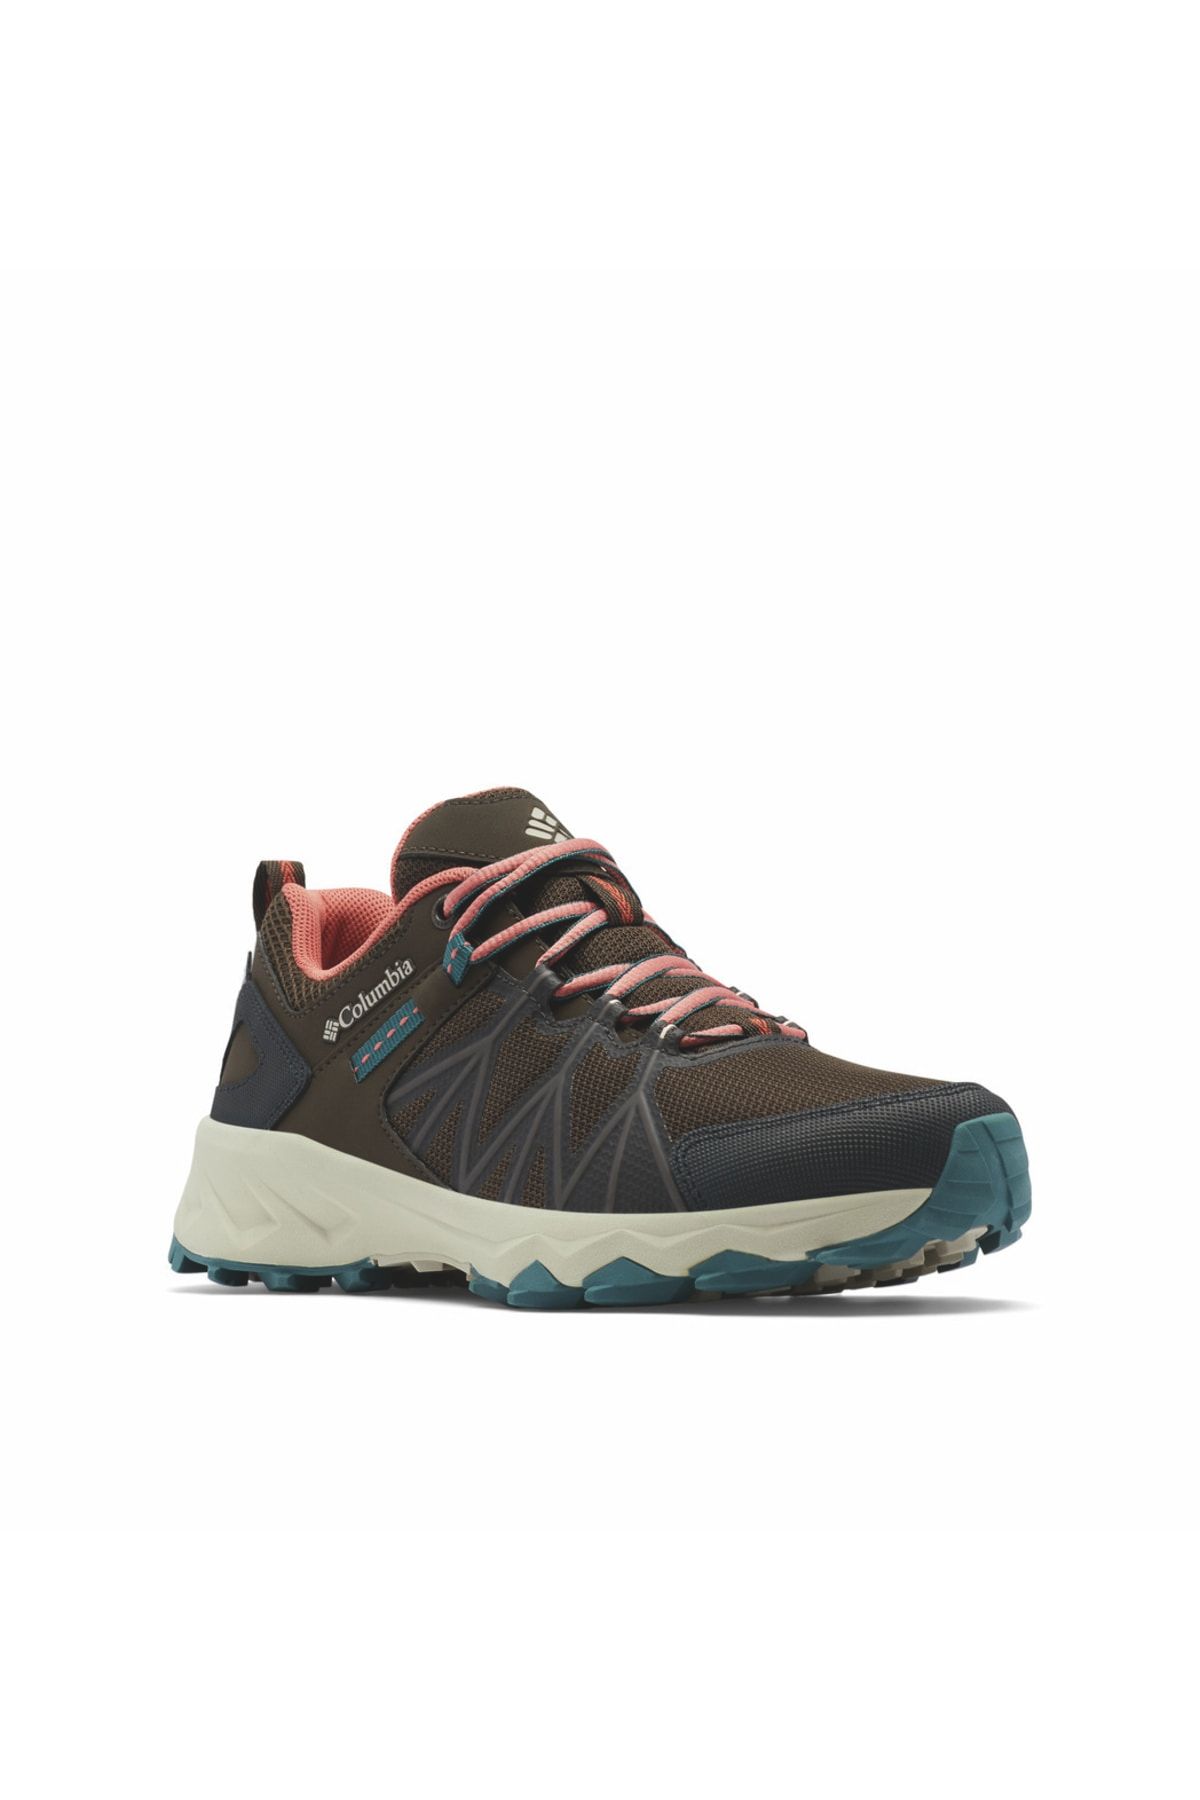 Columbia Peakfreak II Outdry Waterproof Walking Men's Outdoor Shoes  BM5953-053 - Trendyol